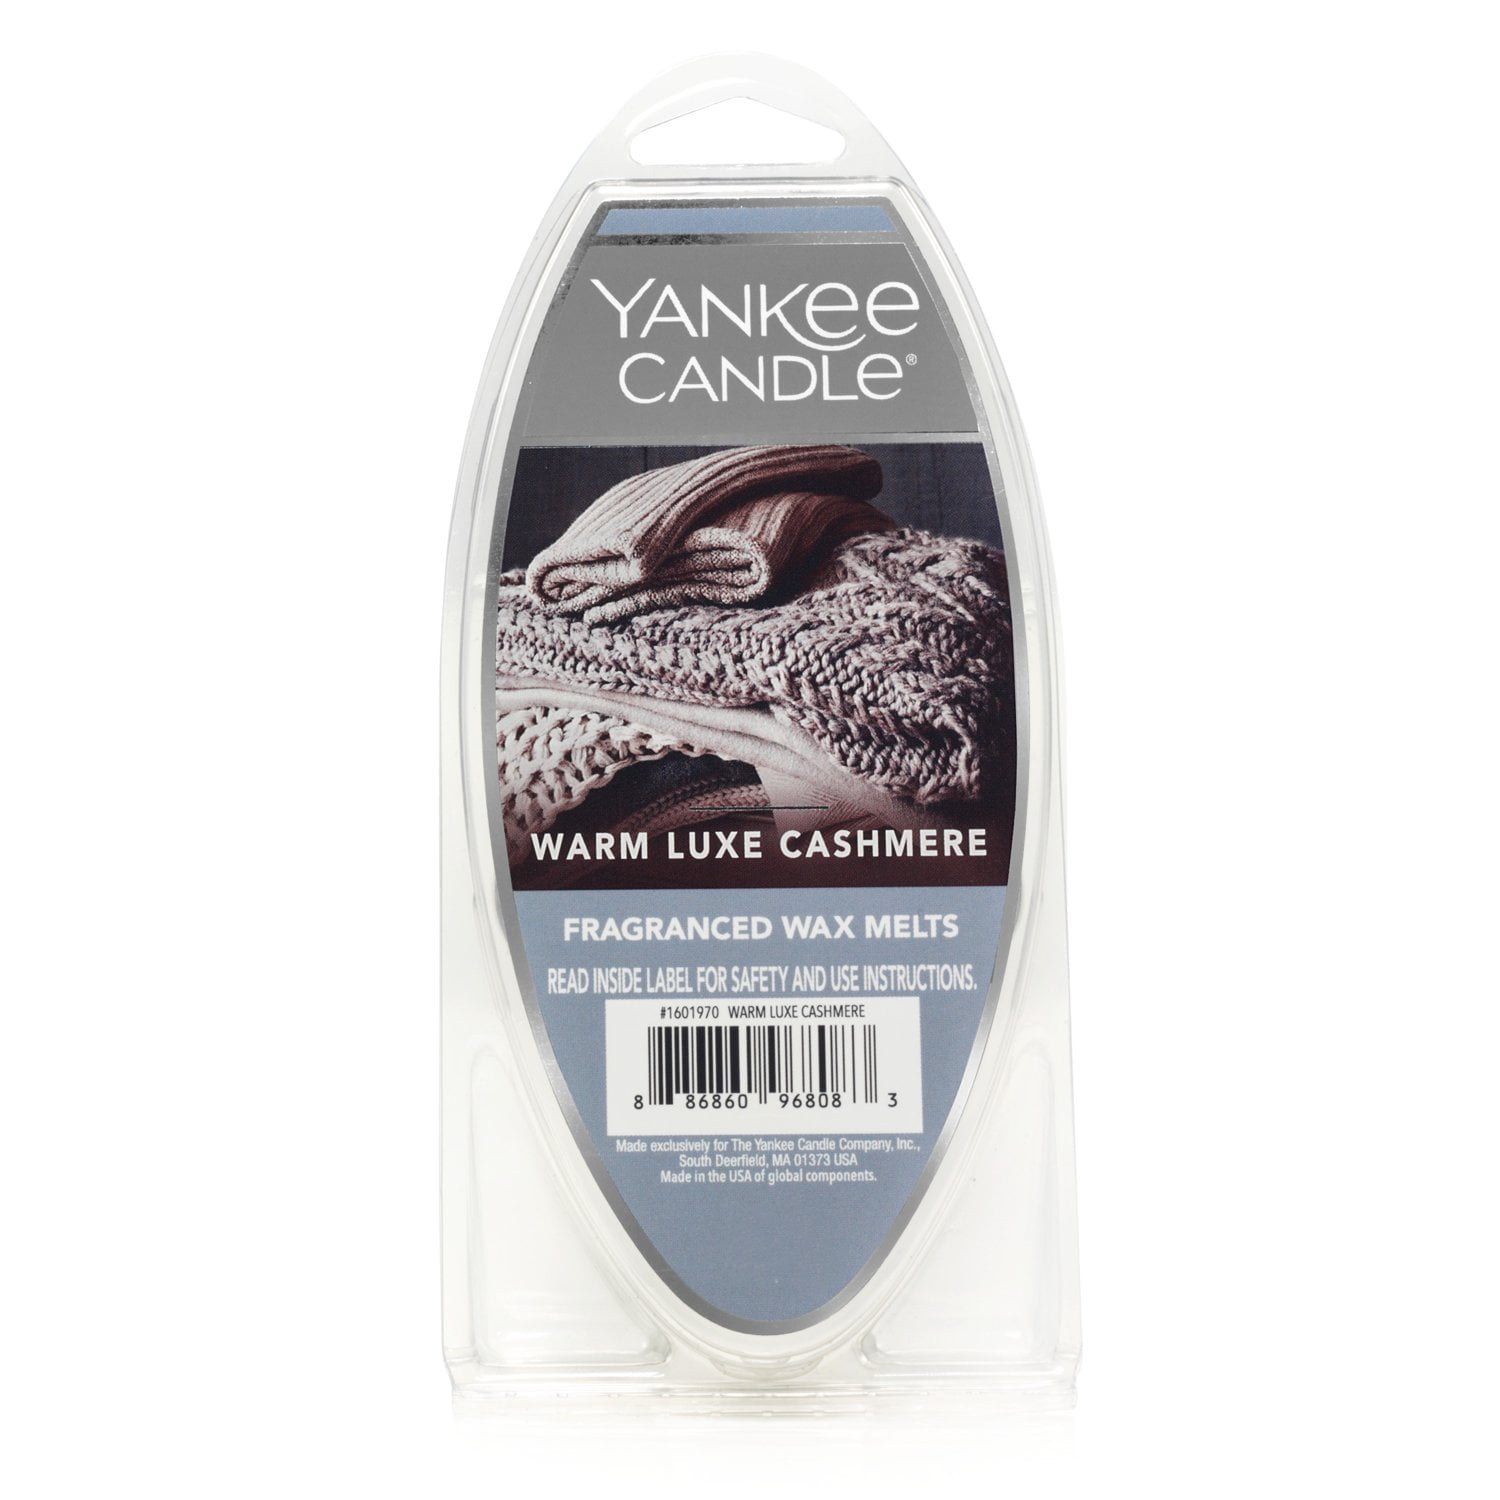 Yankee Candle Tarts Sparkling Cinnamon Wax Melt